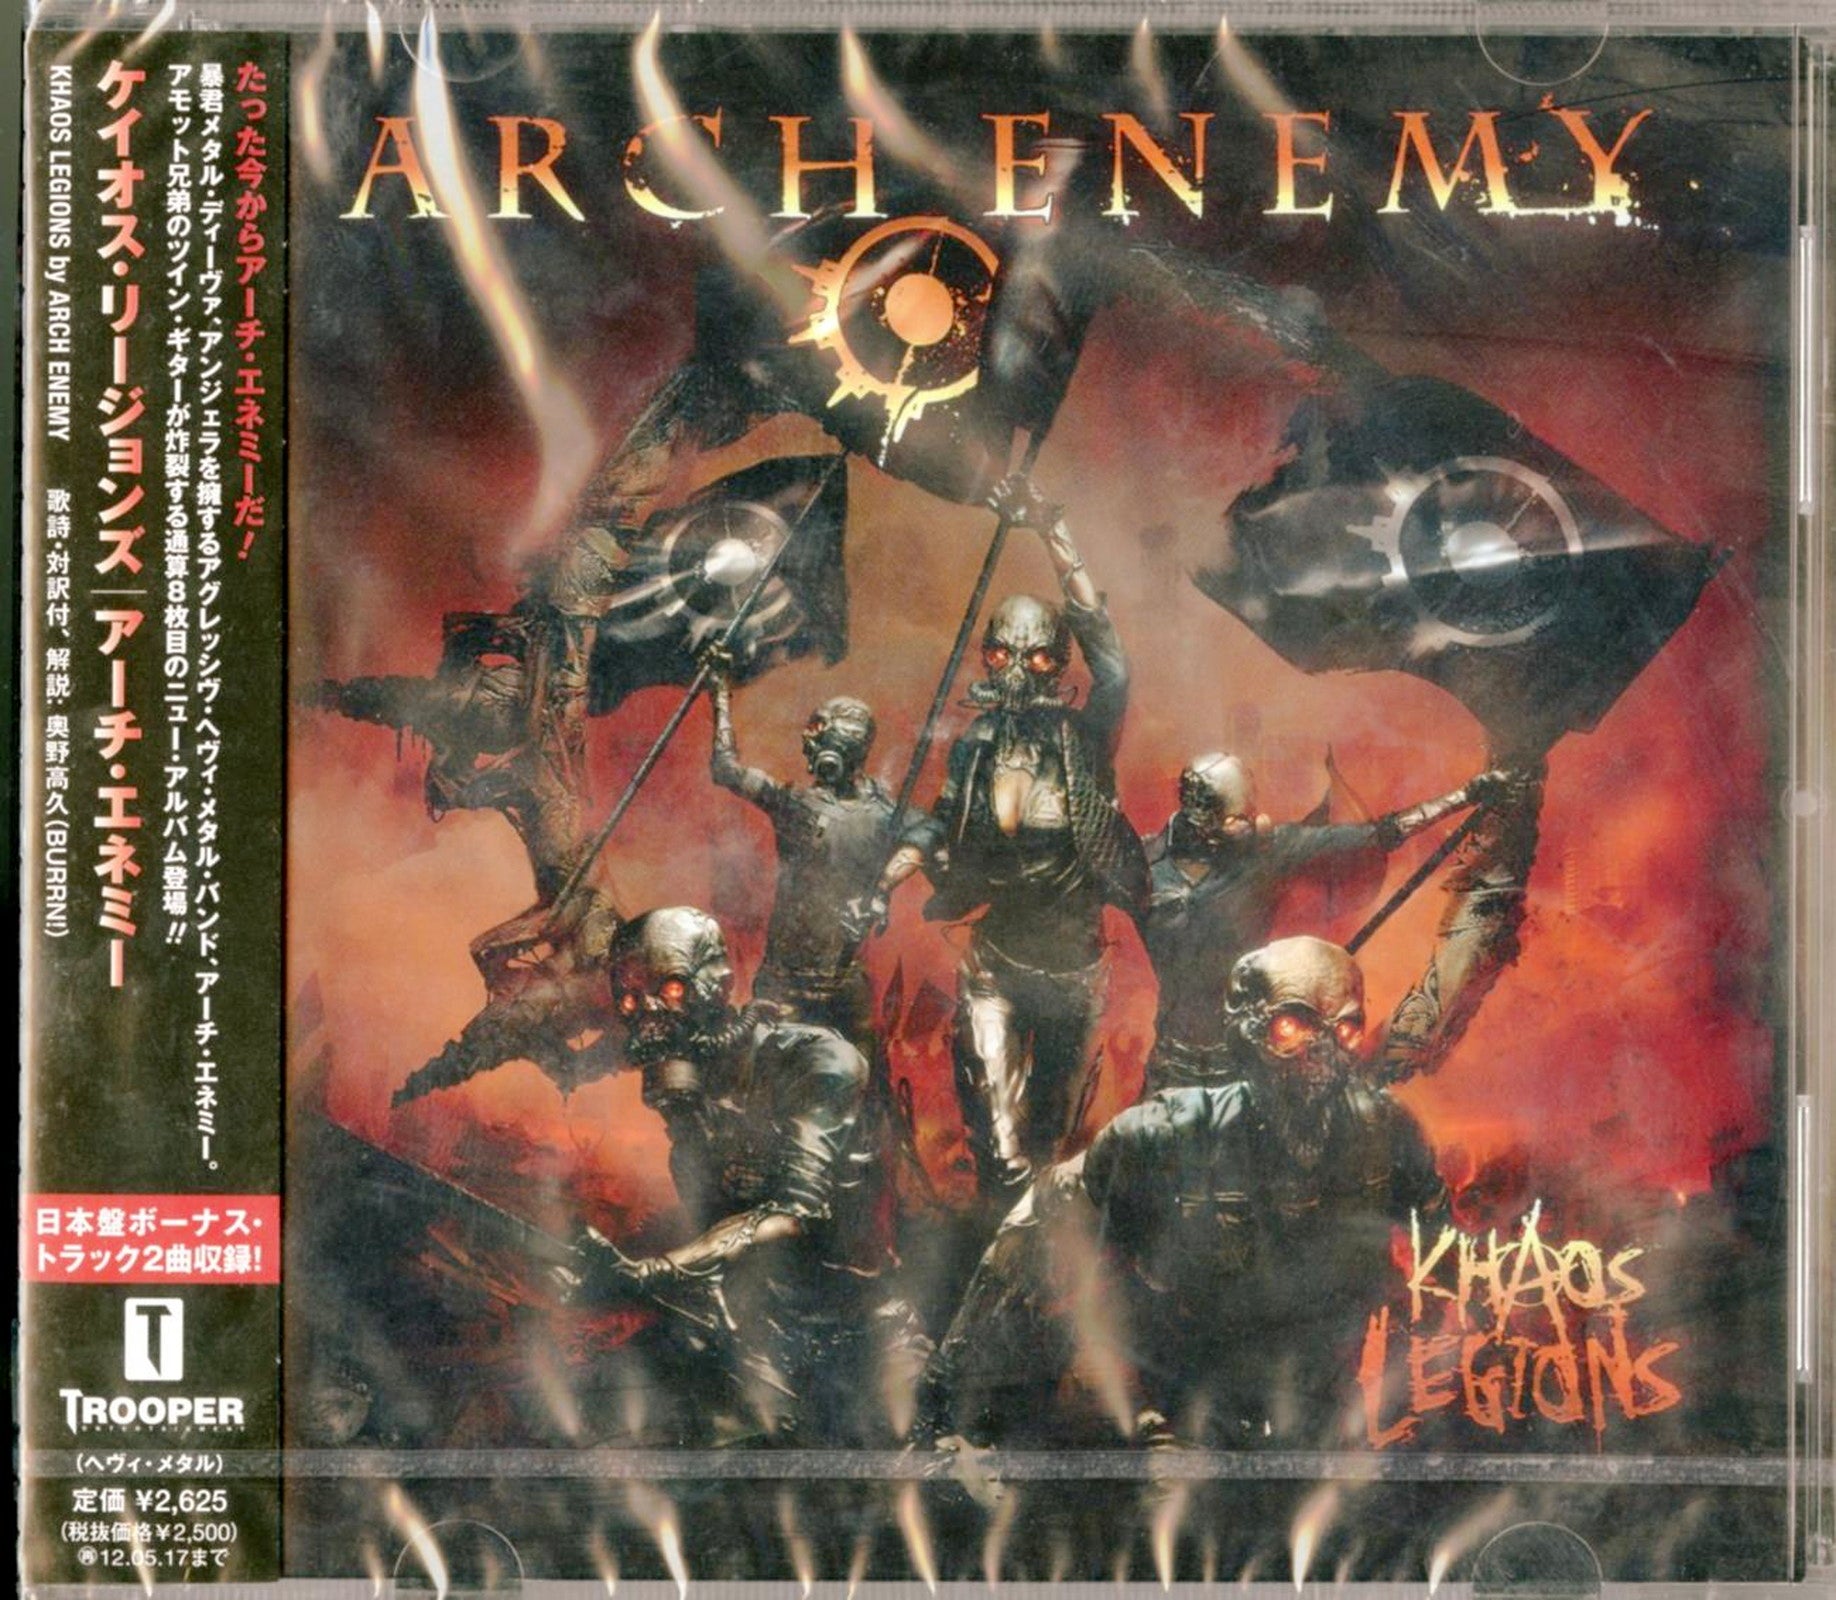 Arch Enemy - Khaos Legions - Japan CD Bonus Track – CDs Vinyl